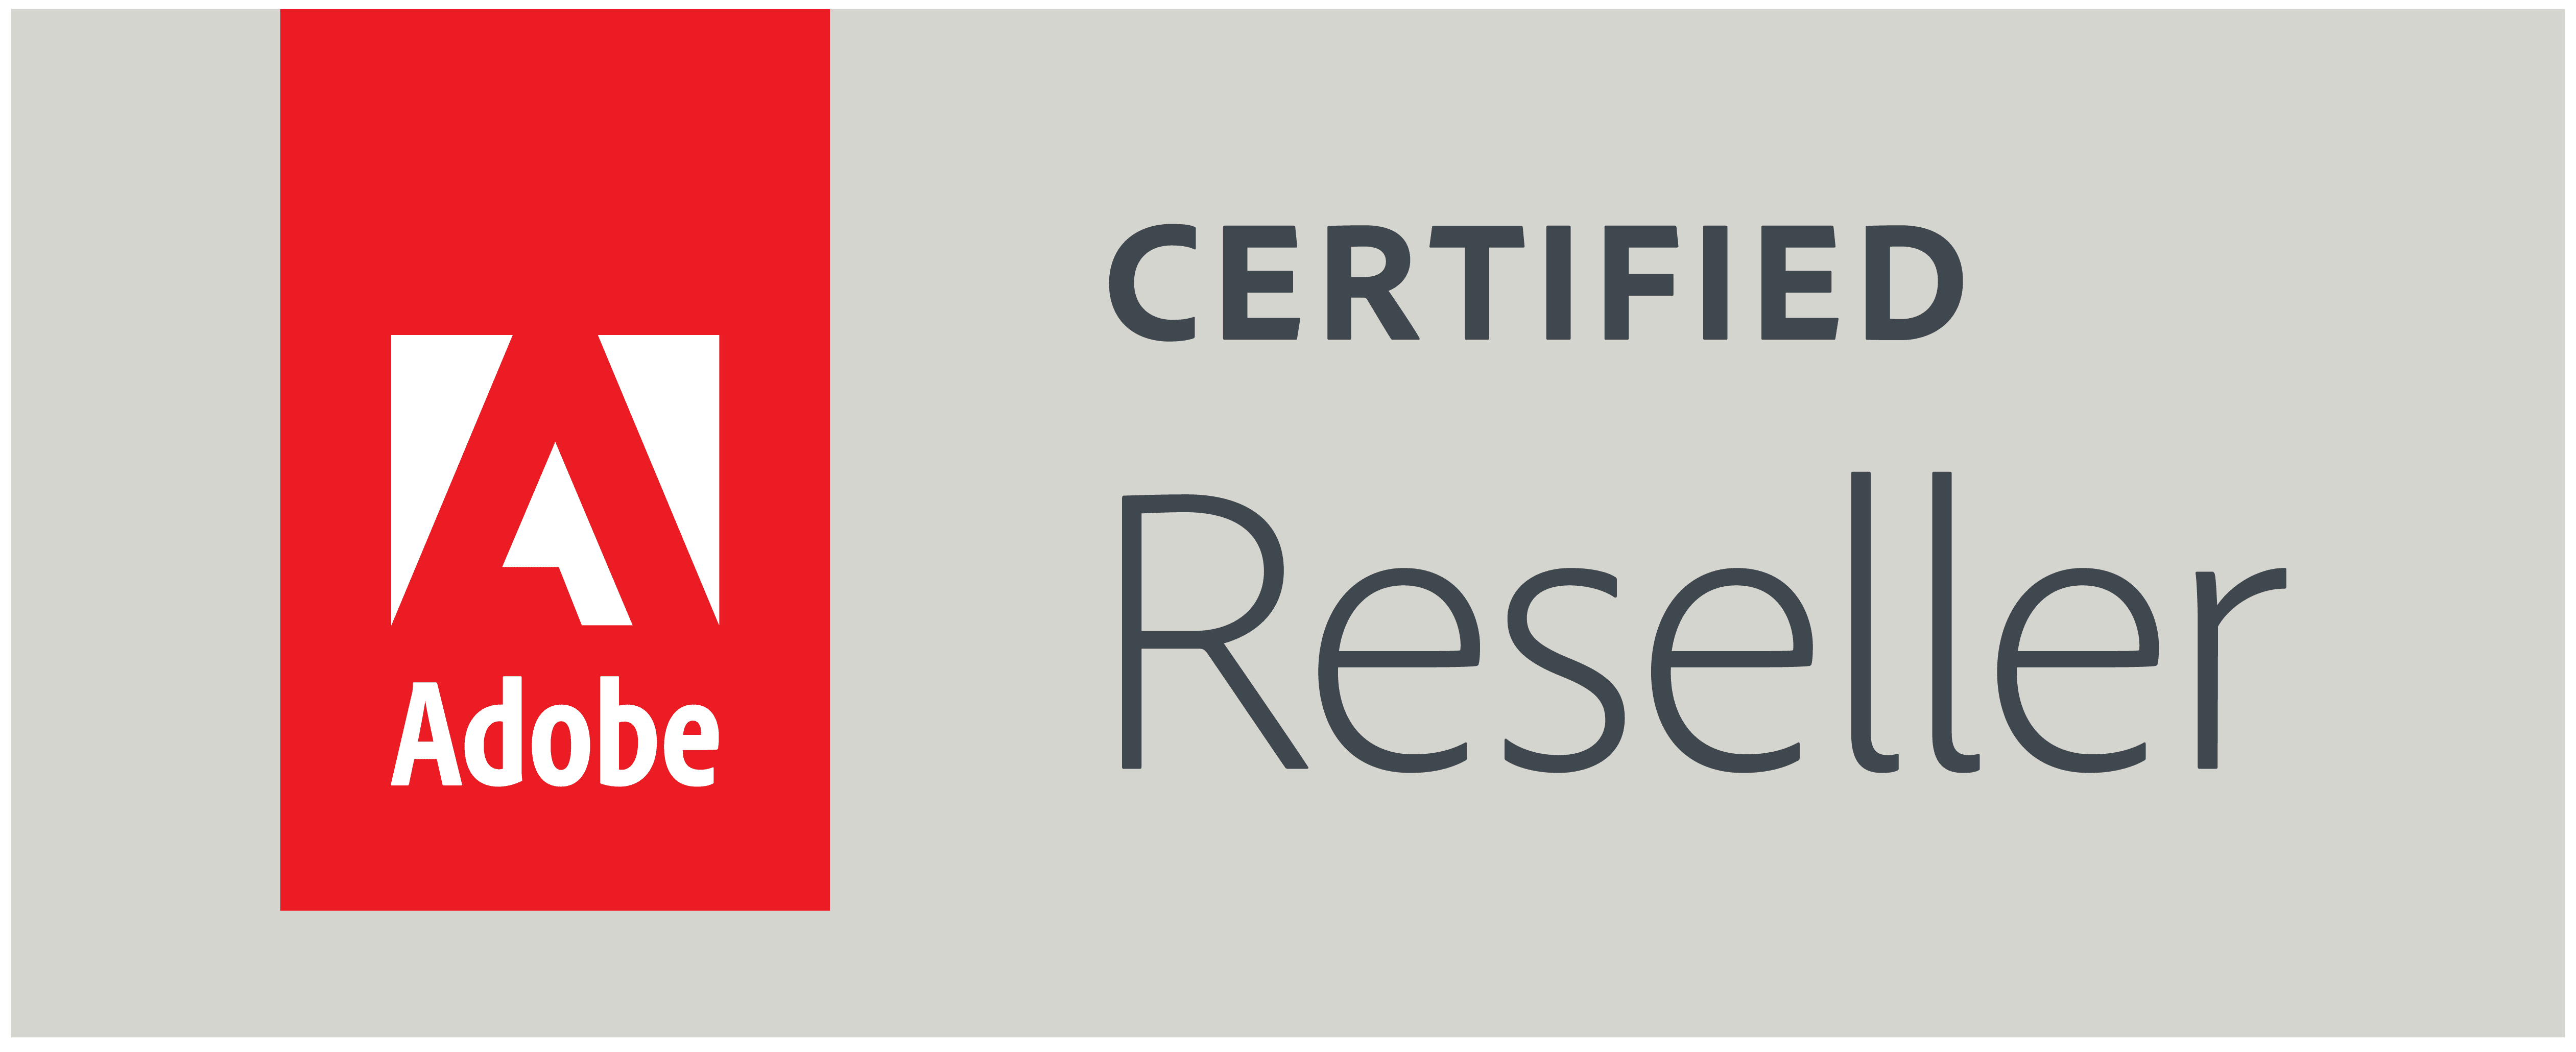 Adobe Certified Reseller: Adobe Connection Program